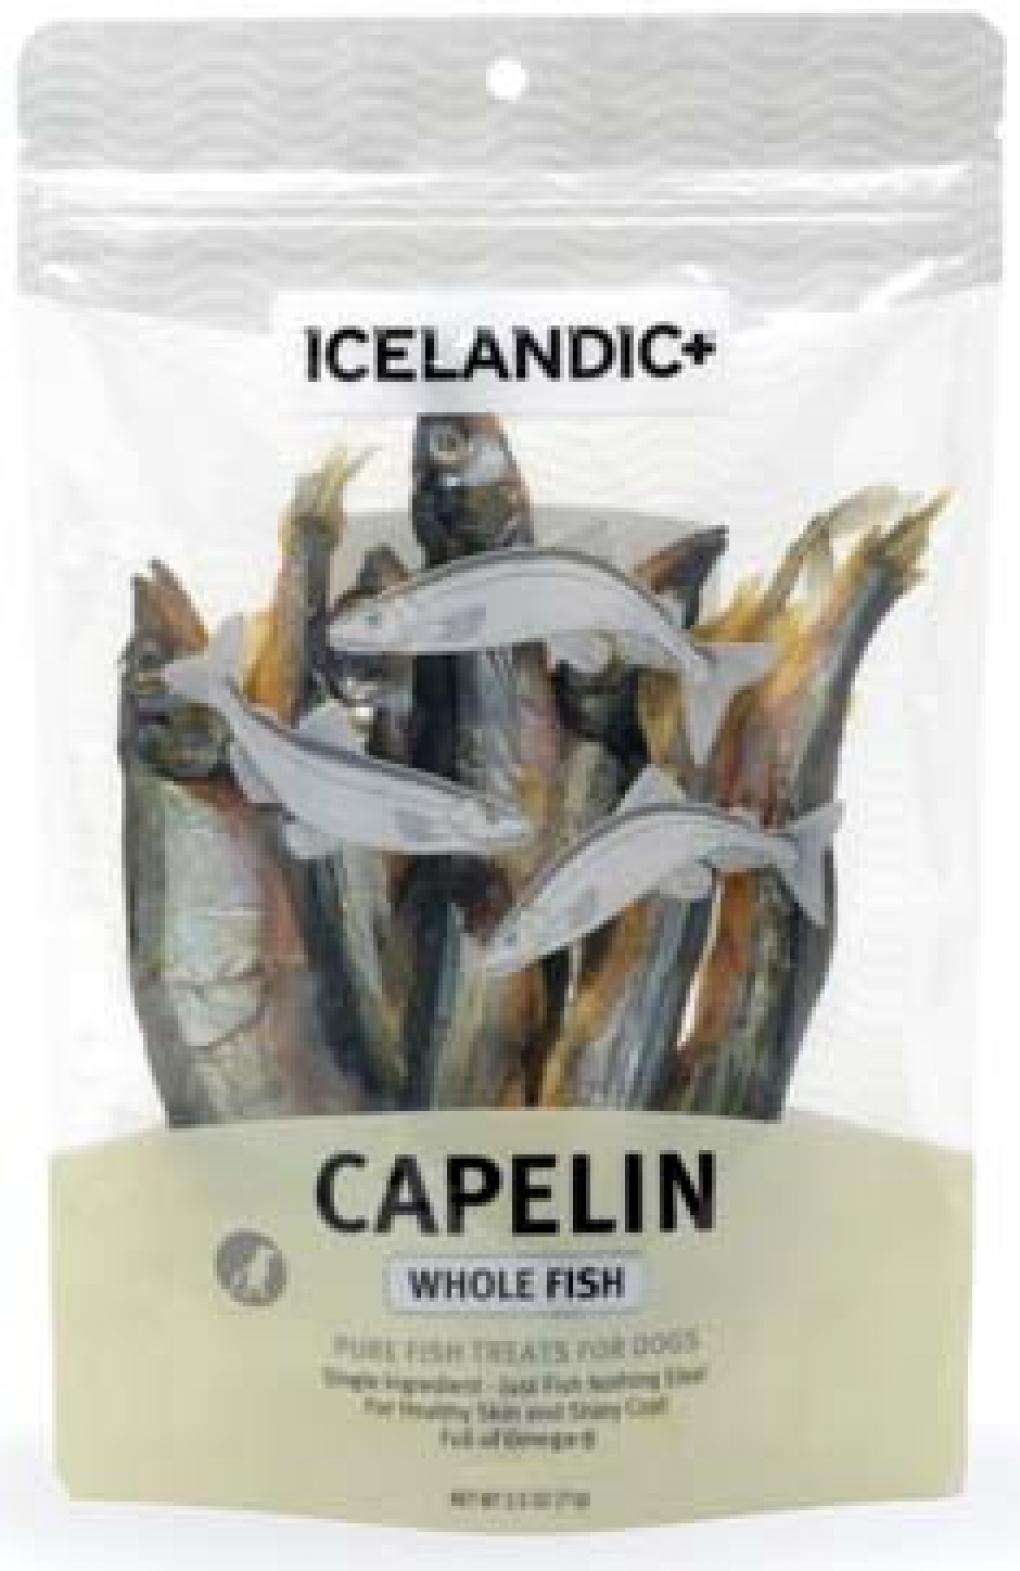 IcelandicPlus recalled Whole Capelin Fish pet treats because of concerns of botulism poisoning